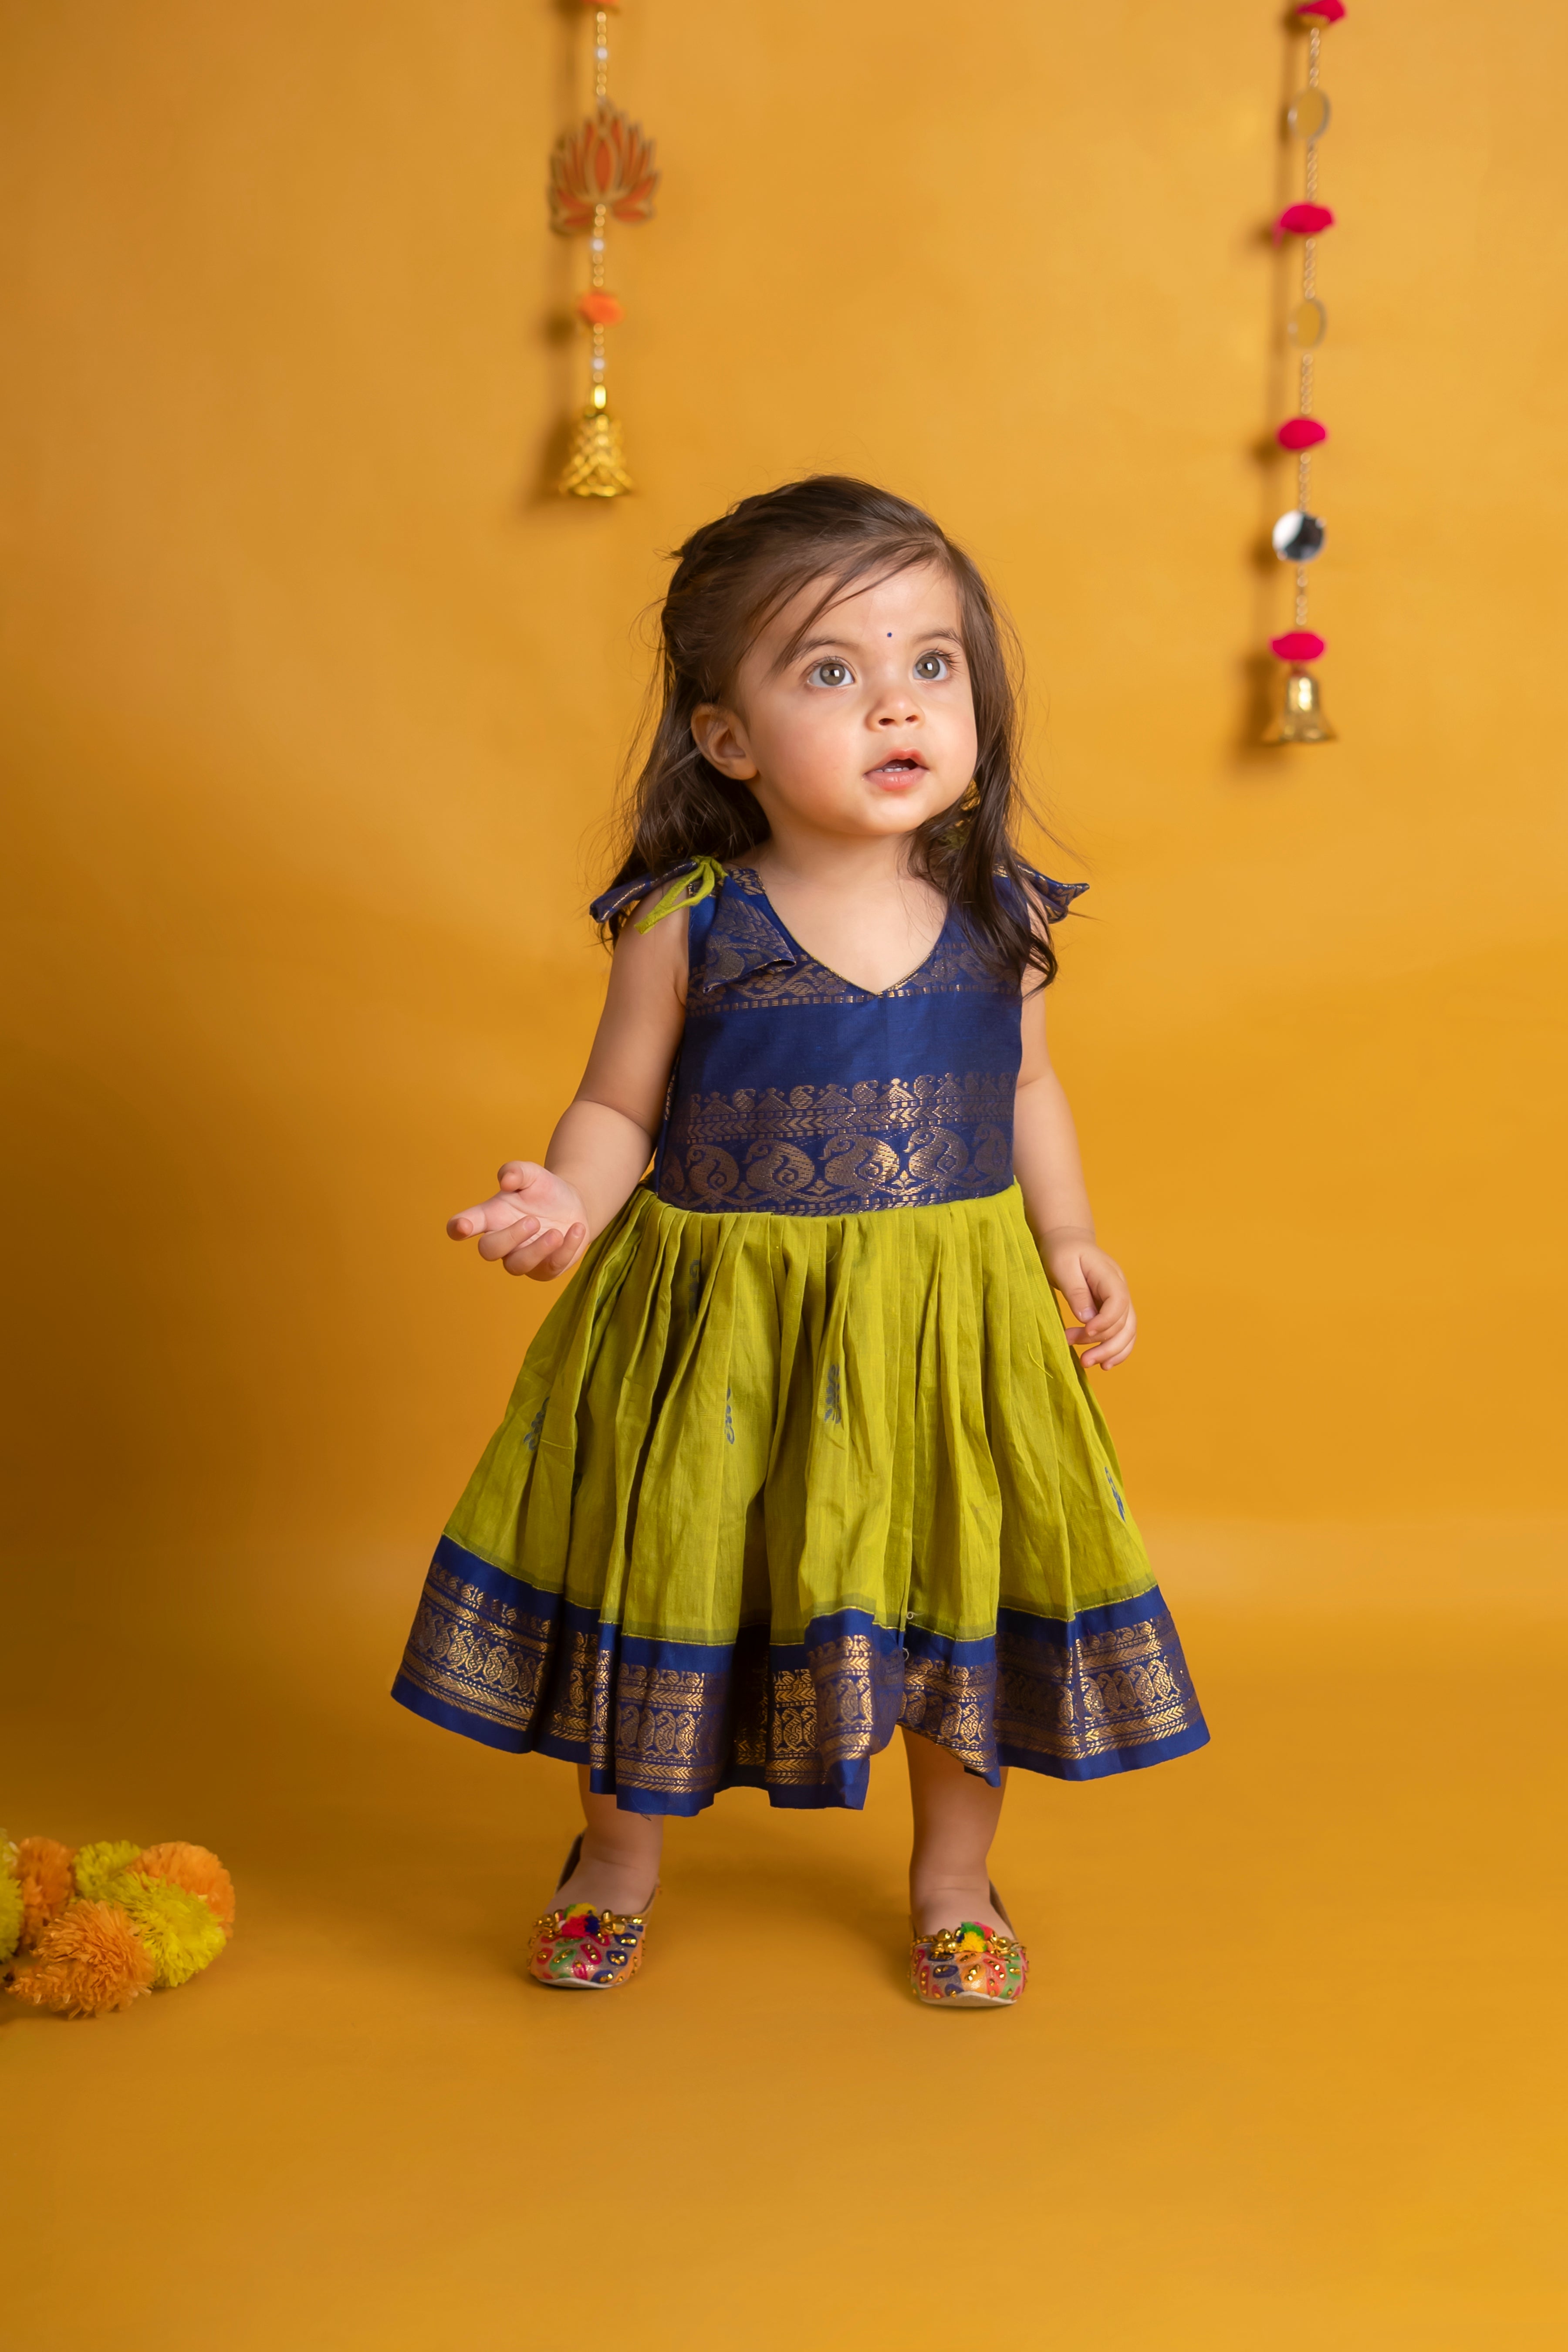 Fashion Dress for Infant: अपने नन्हे-मुन्ने को सबसे प्यारा दिखाये देखें ये  बेबी फैशन ड्रेस विकल्प | fashion dress for infants get comfort and style  together | HerZindagi